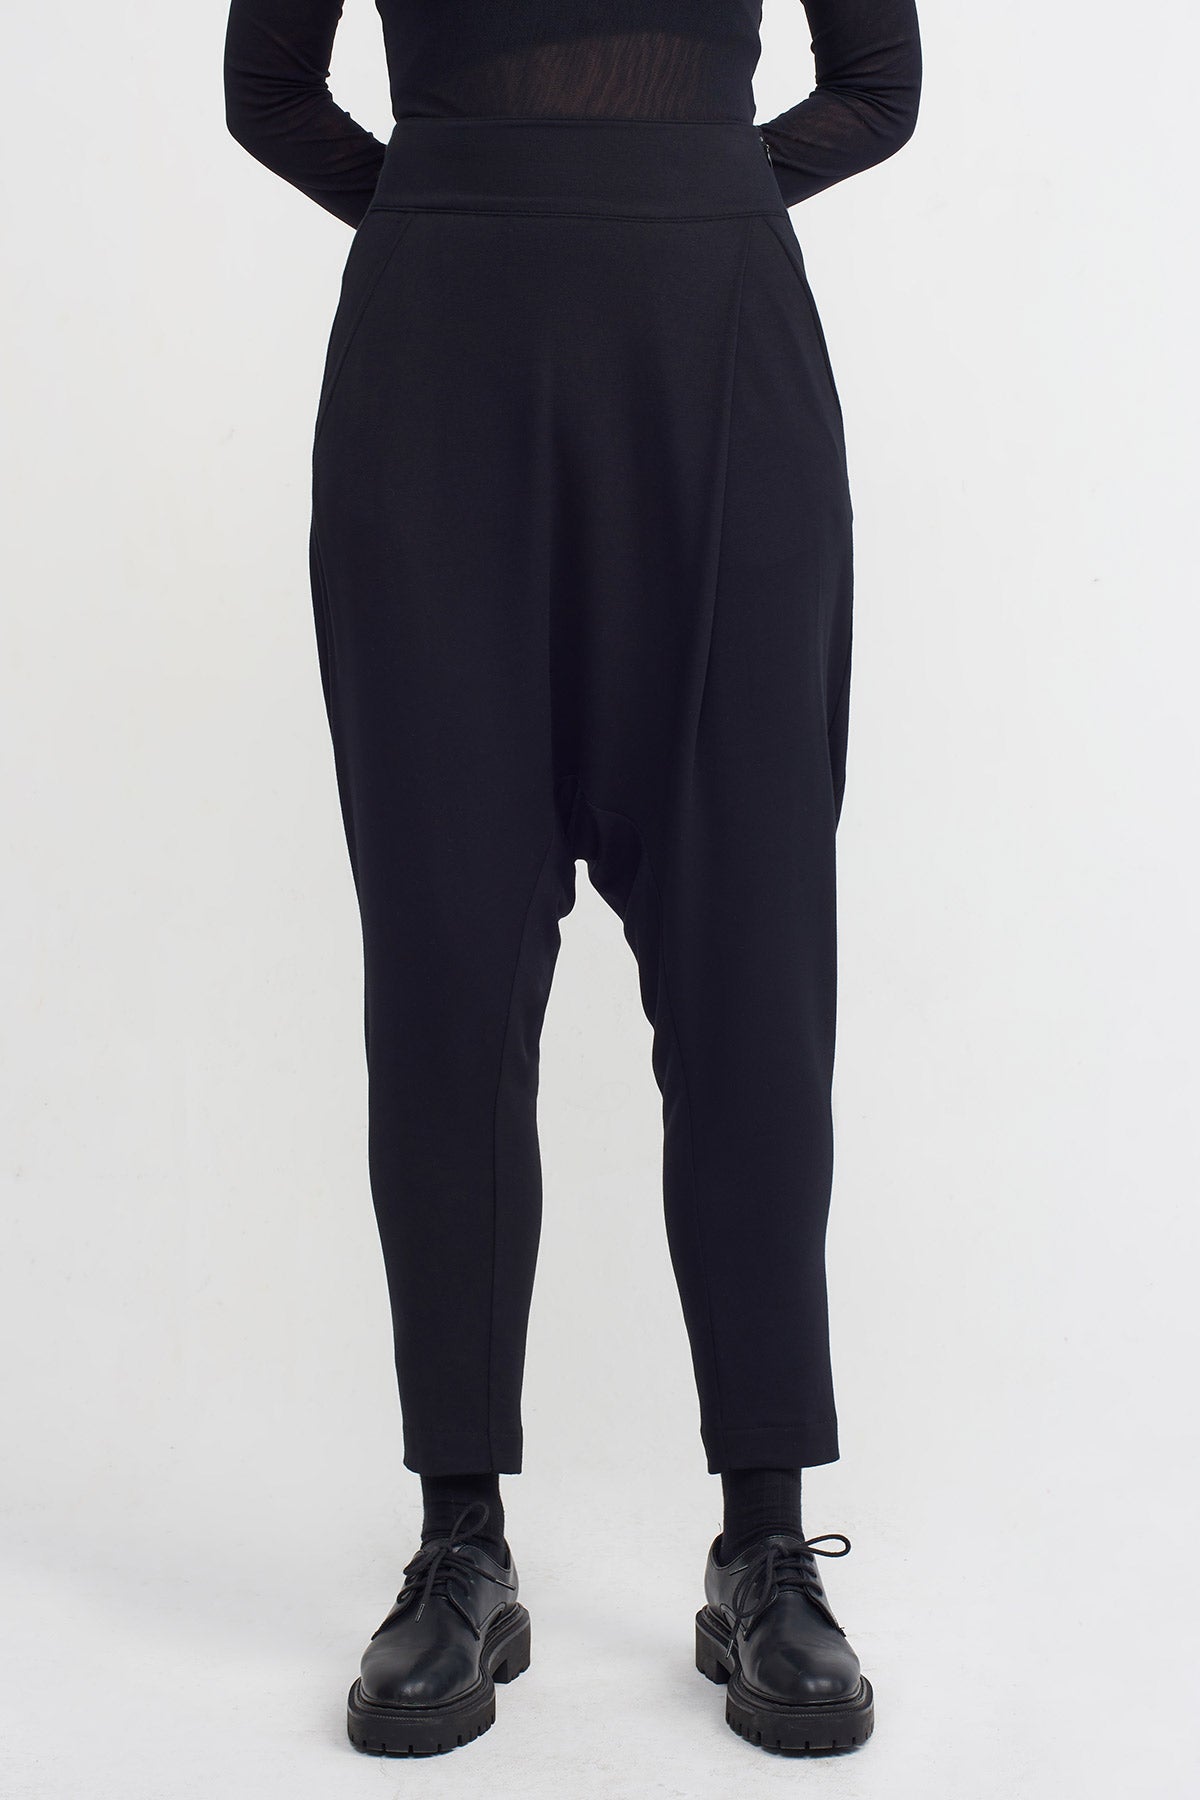 Black Sweat Fabric Harem Pants-K233013017